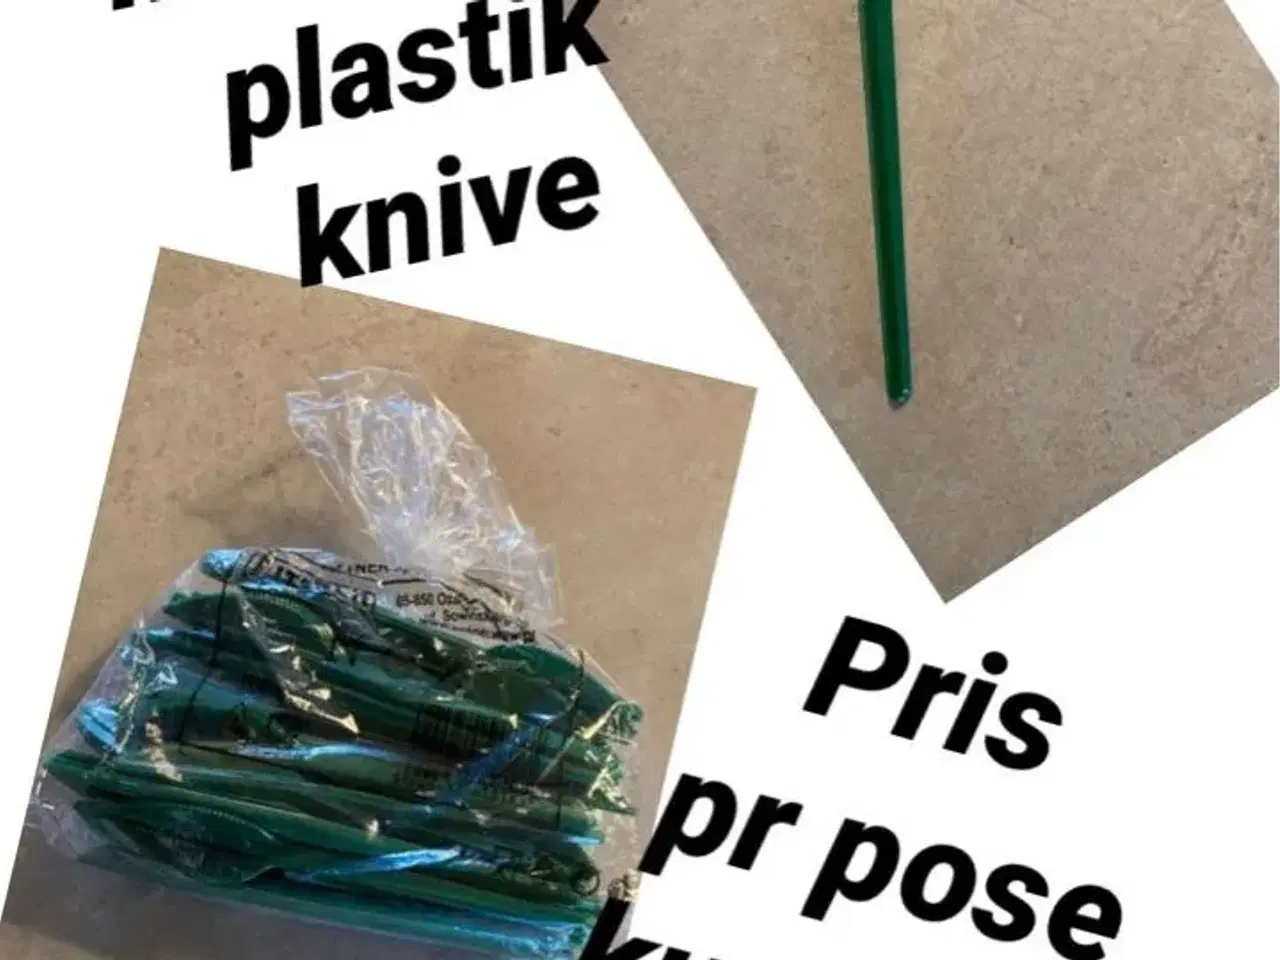 Billede 1 - 100 stk plastik knive